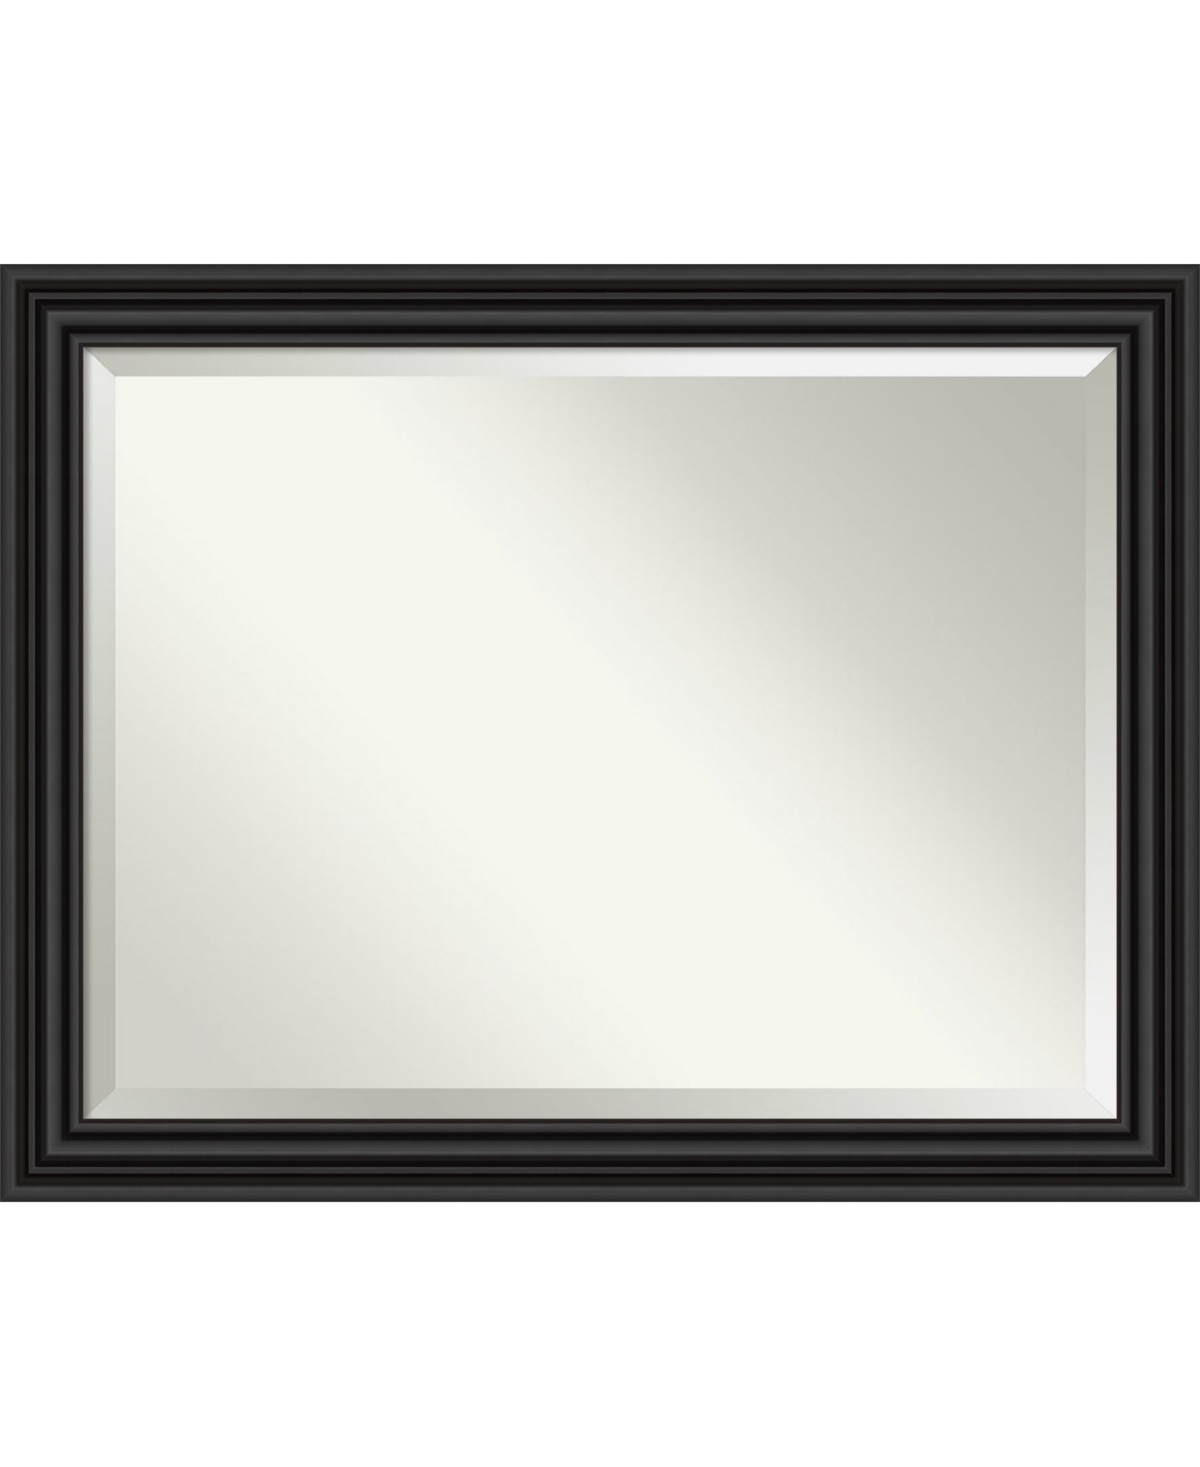 Colonial Framed Bathroom Vanity Wall Mirror, 45.75" x 35.75" - Black